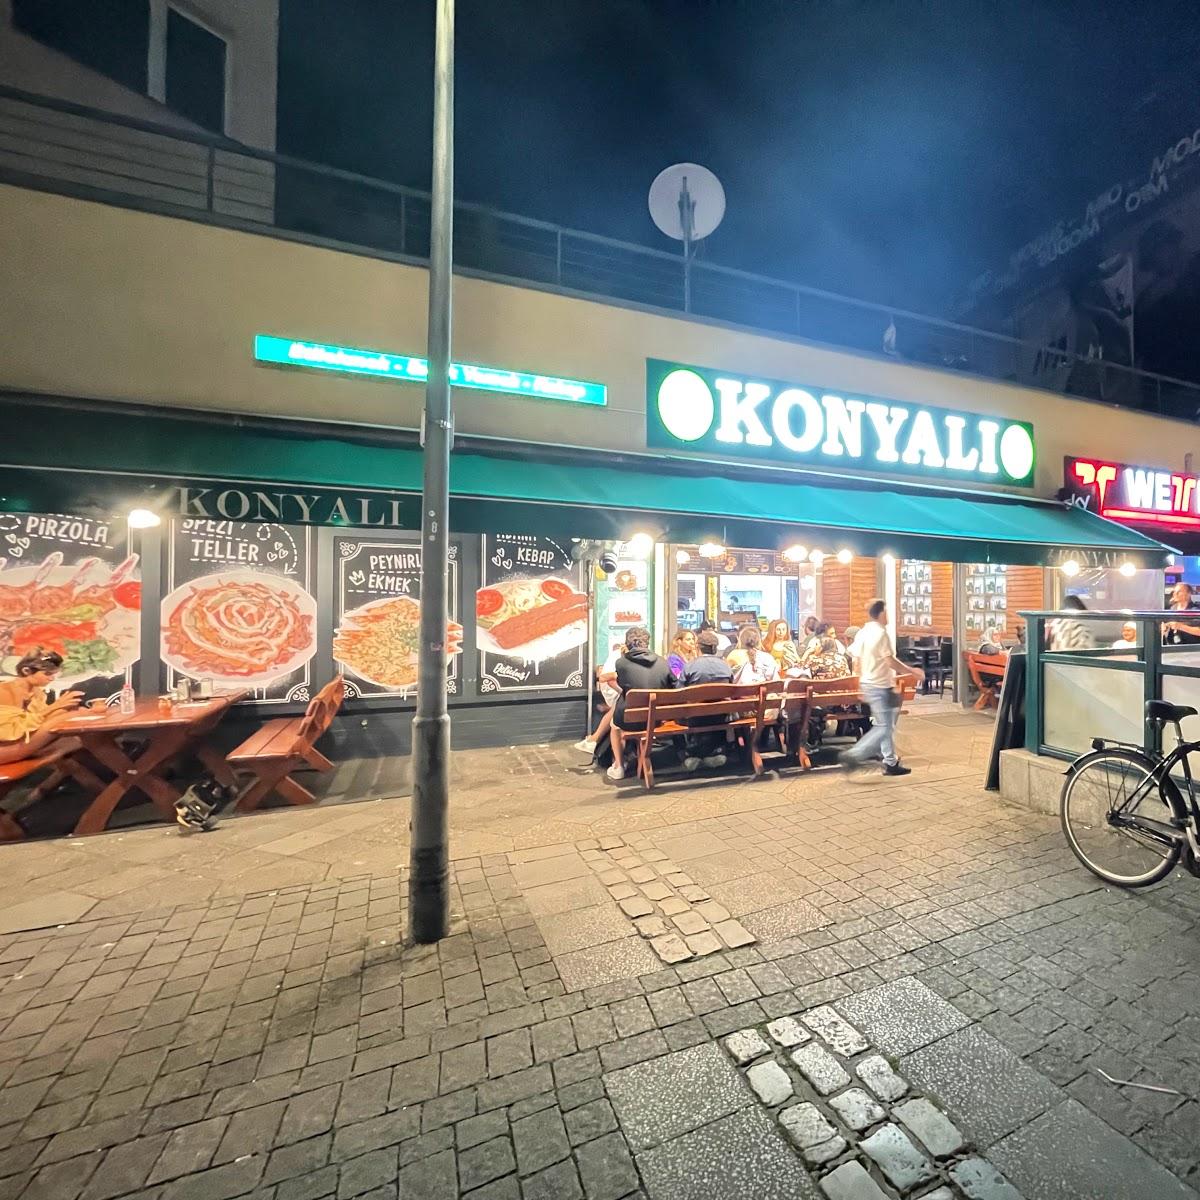 Restaurant "Konyal" in Berlin